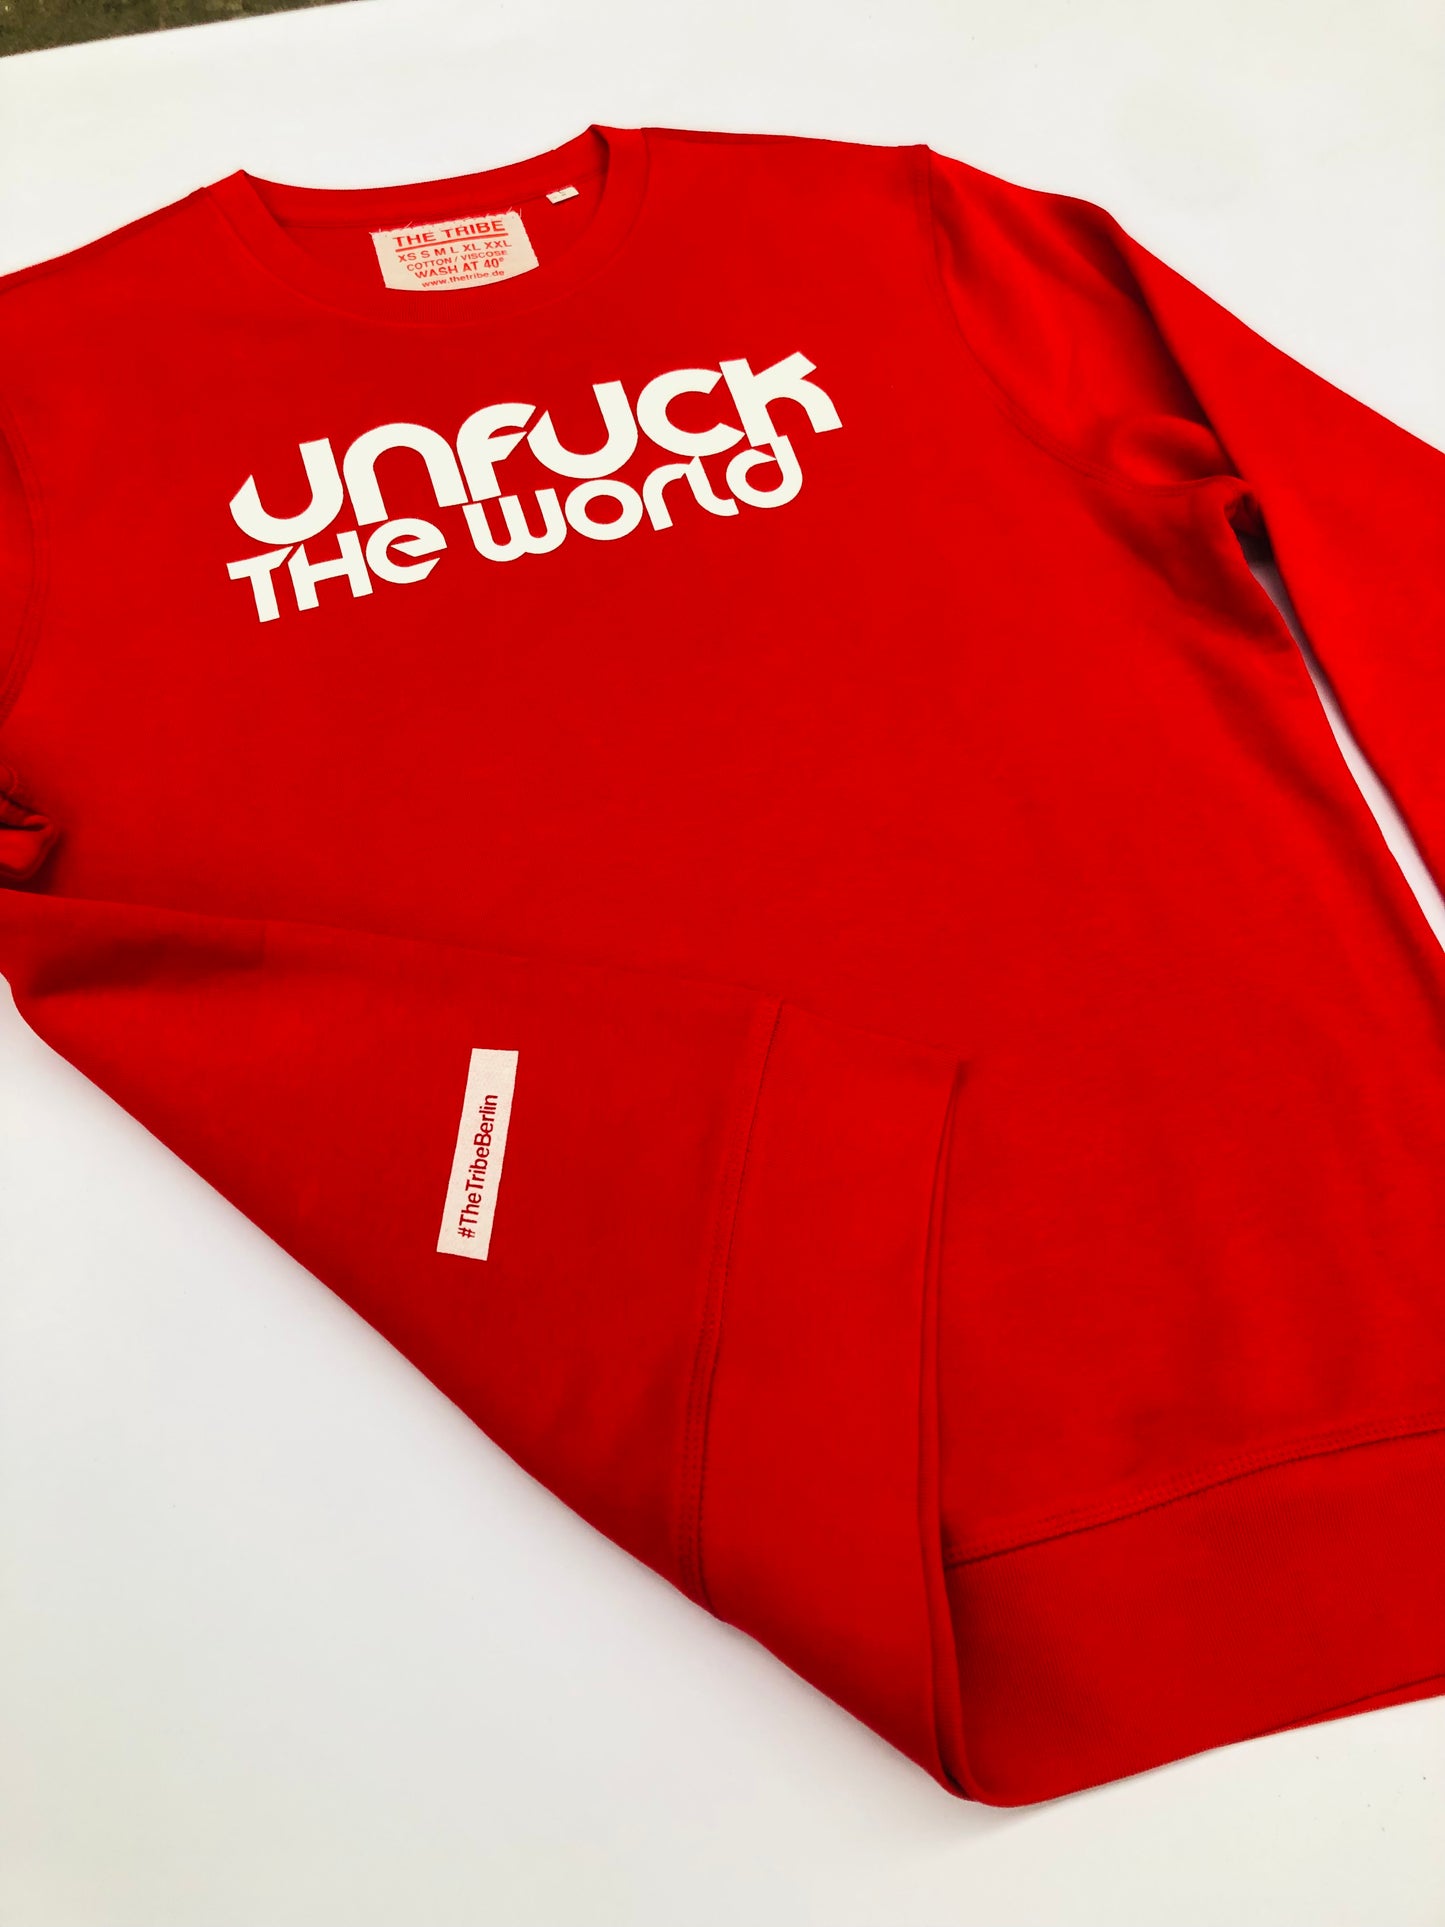 UnFuck The World Sweater